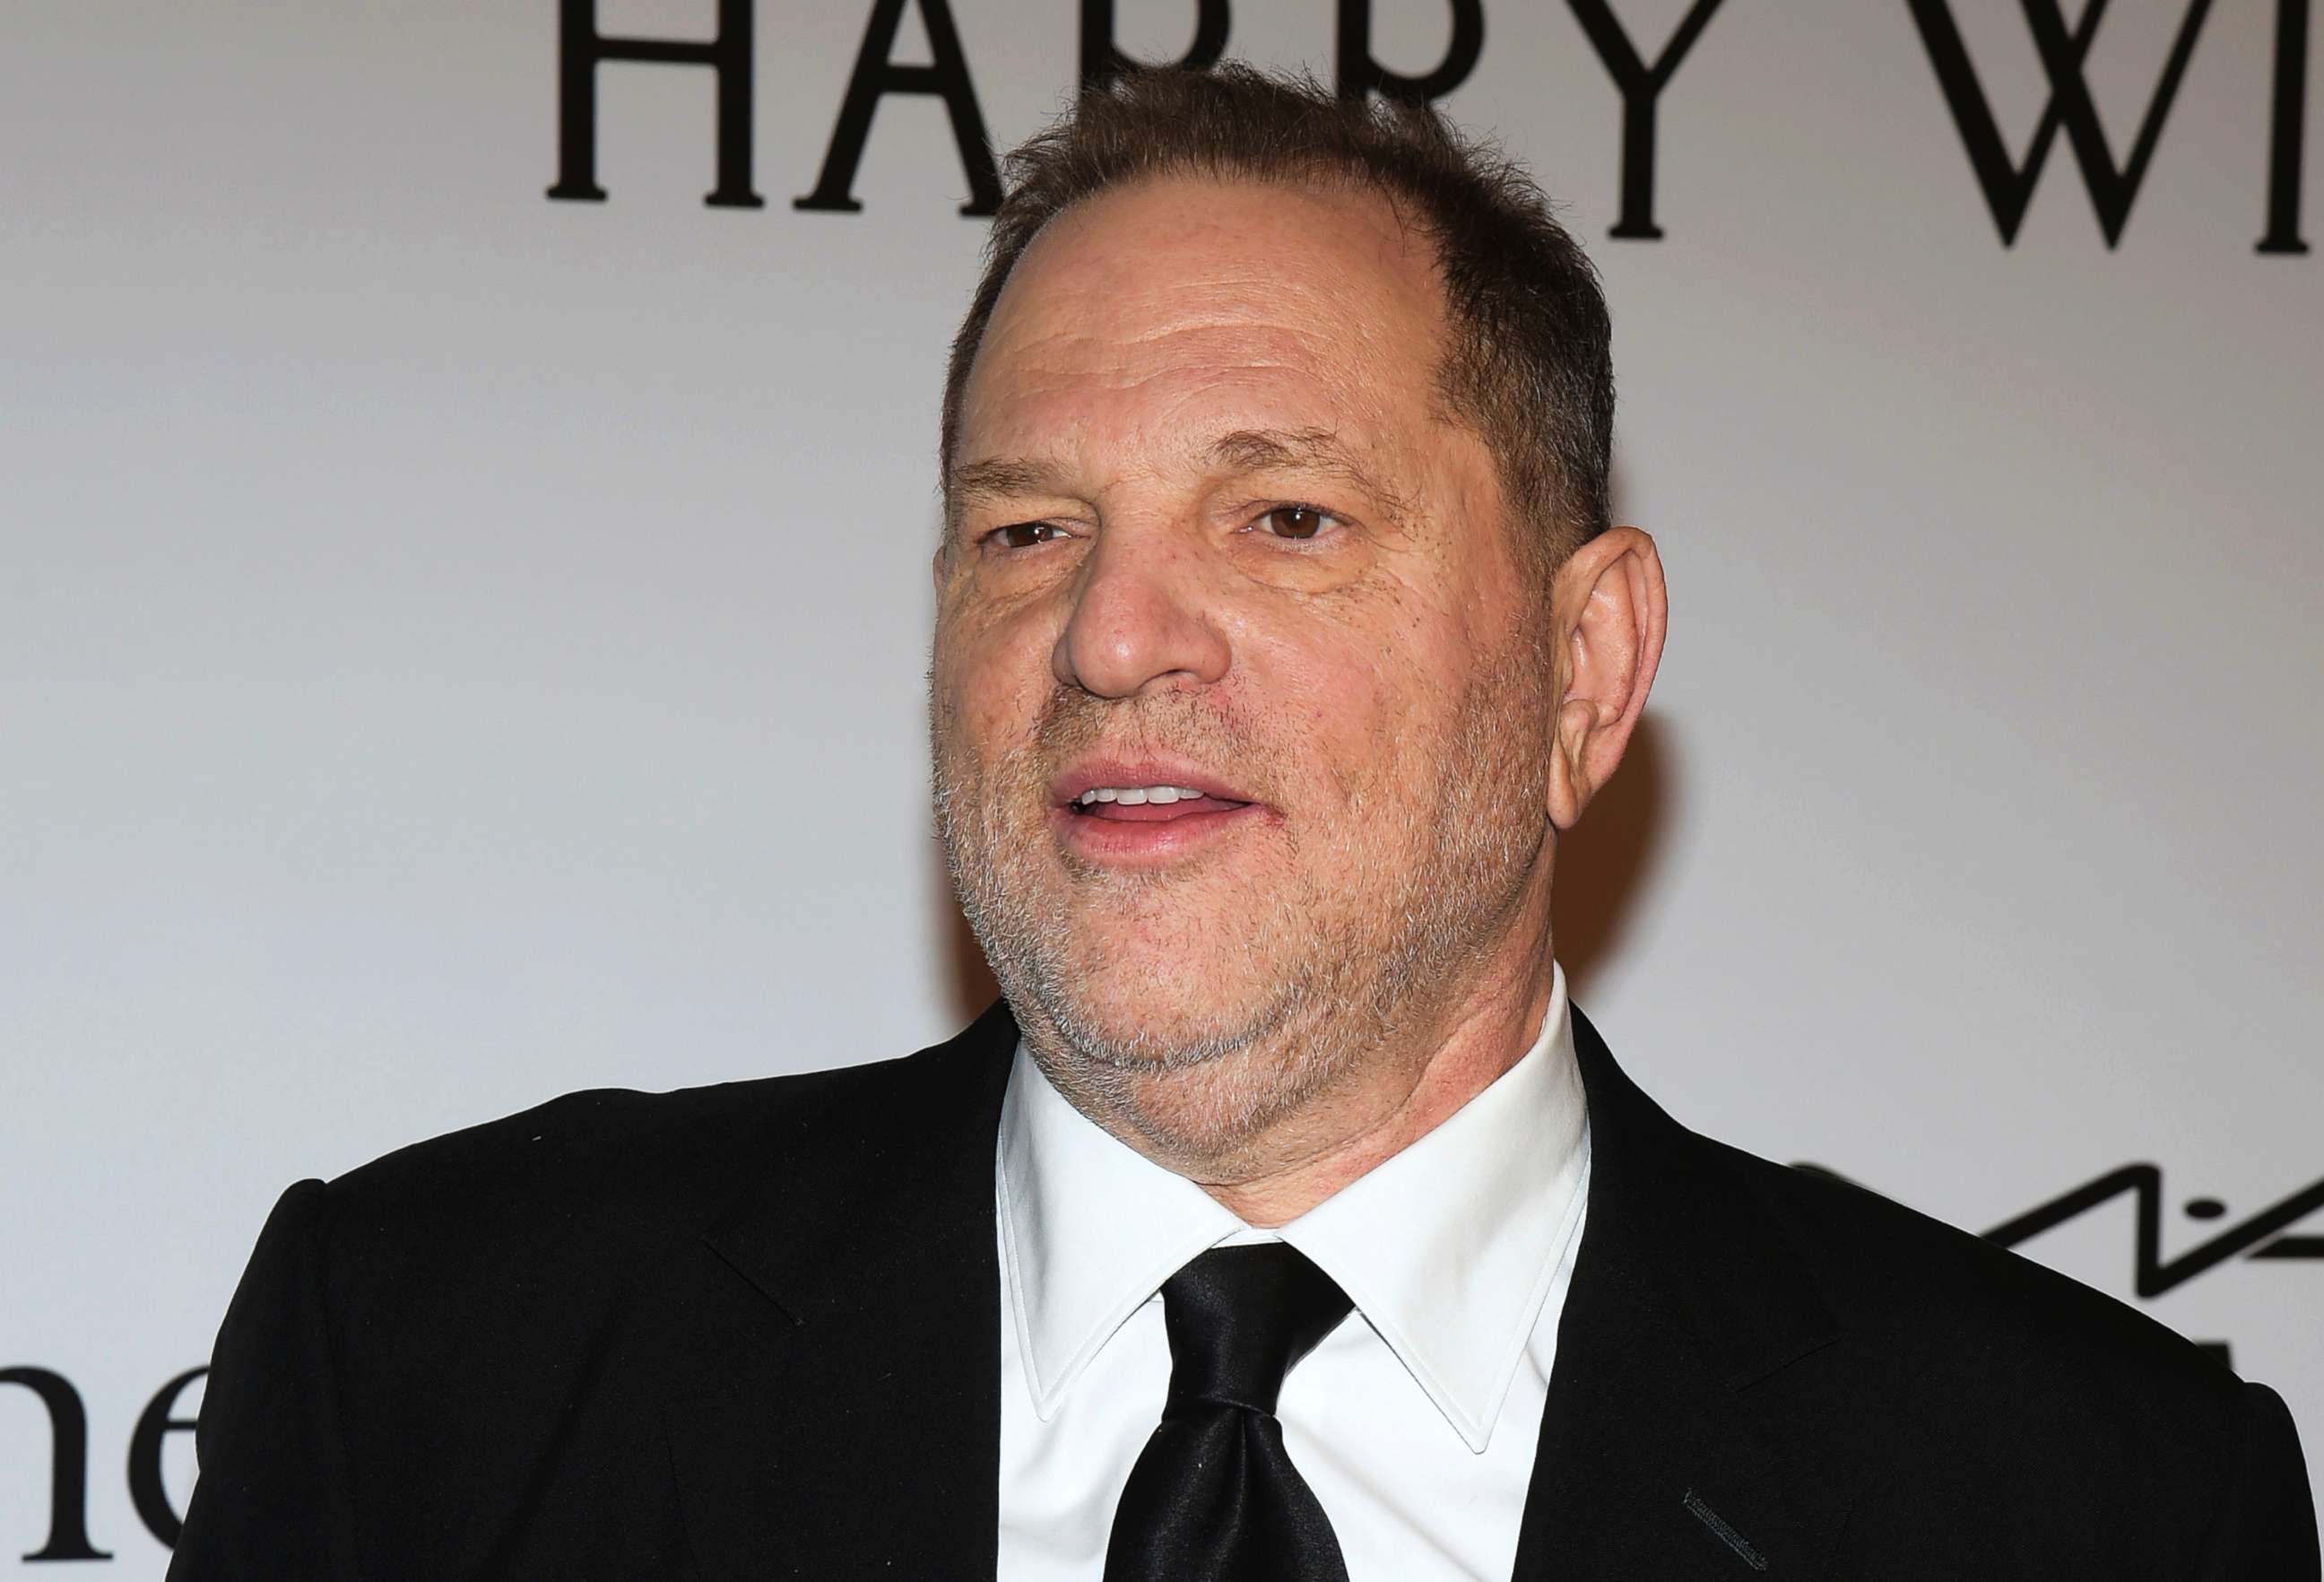 PHOTO: Harvey Weinstein attends an event in New York, Feb. 10, 2016.